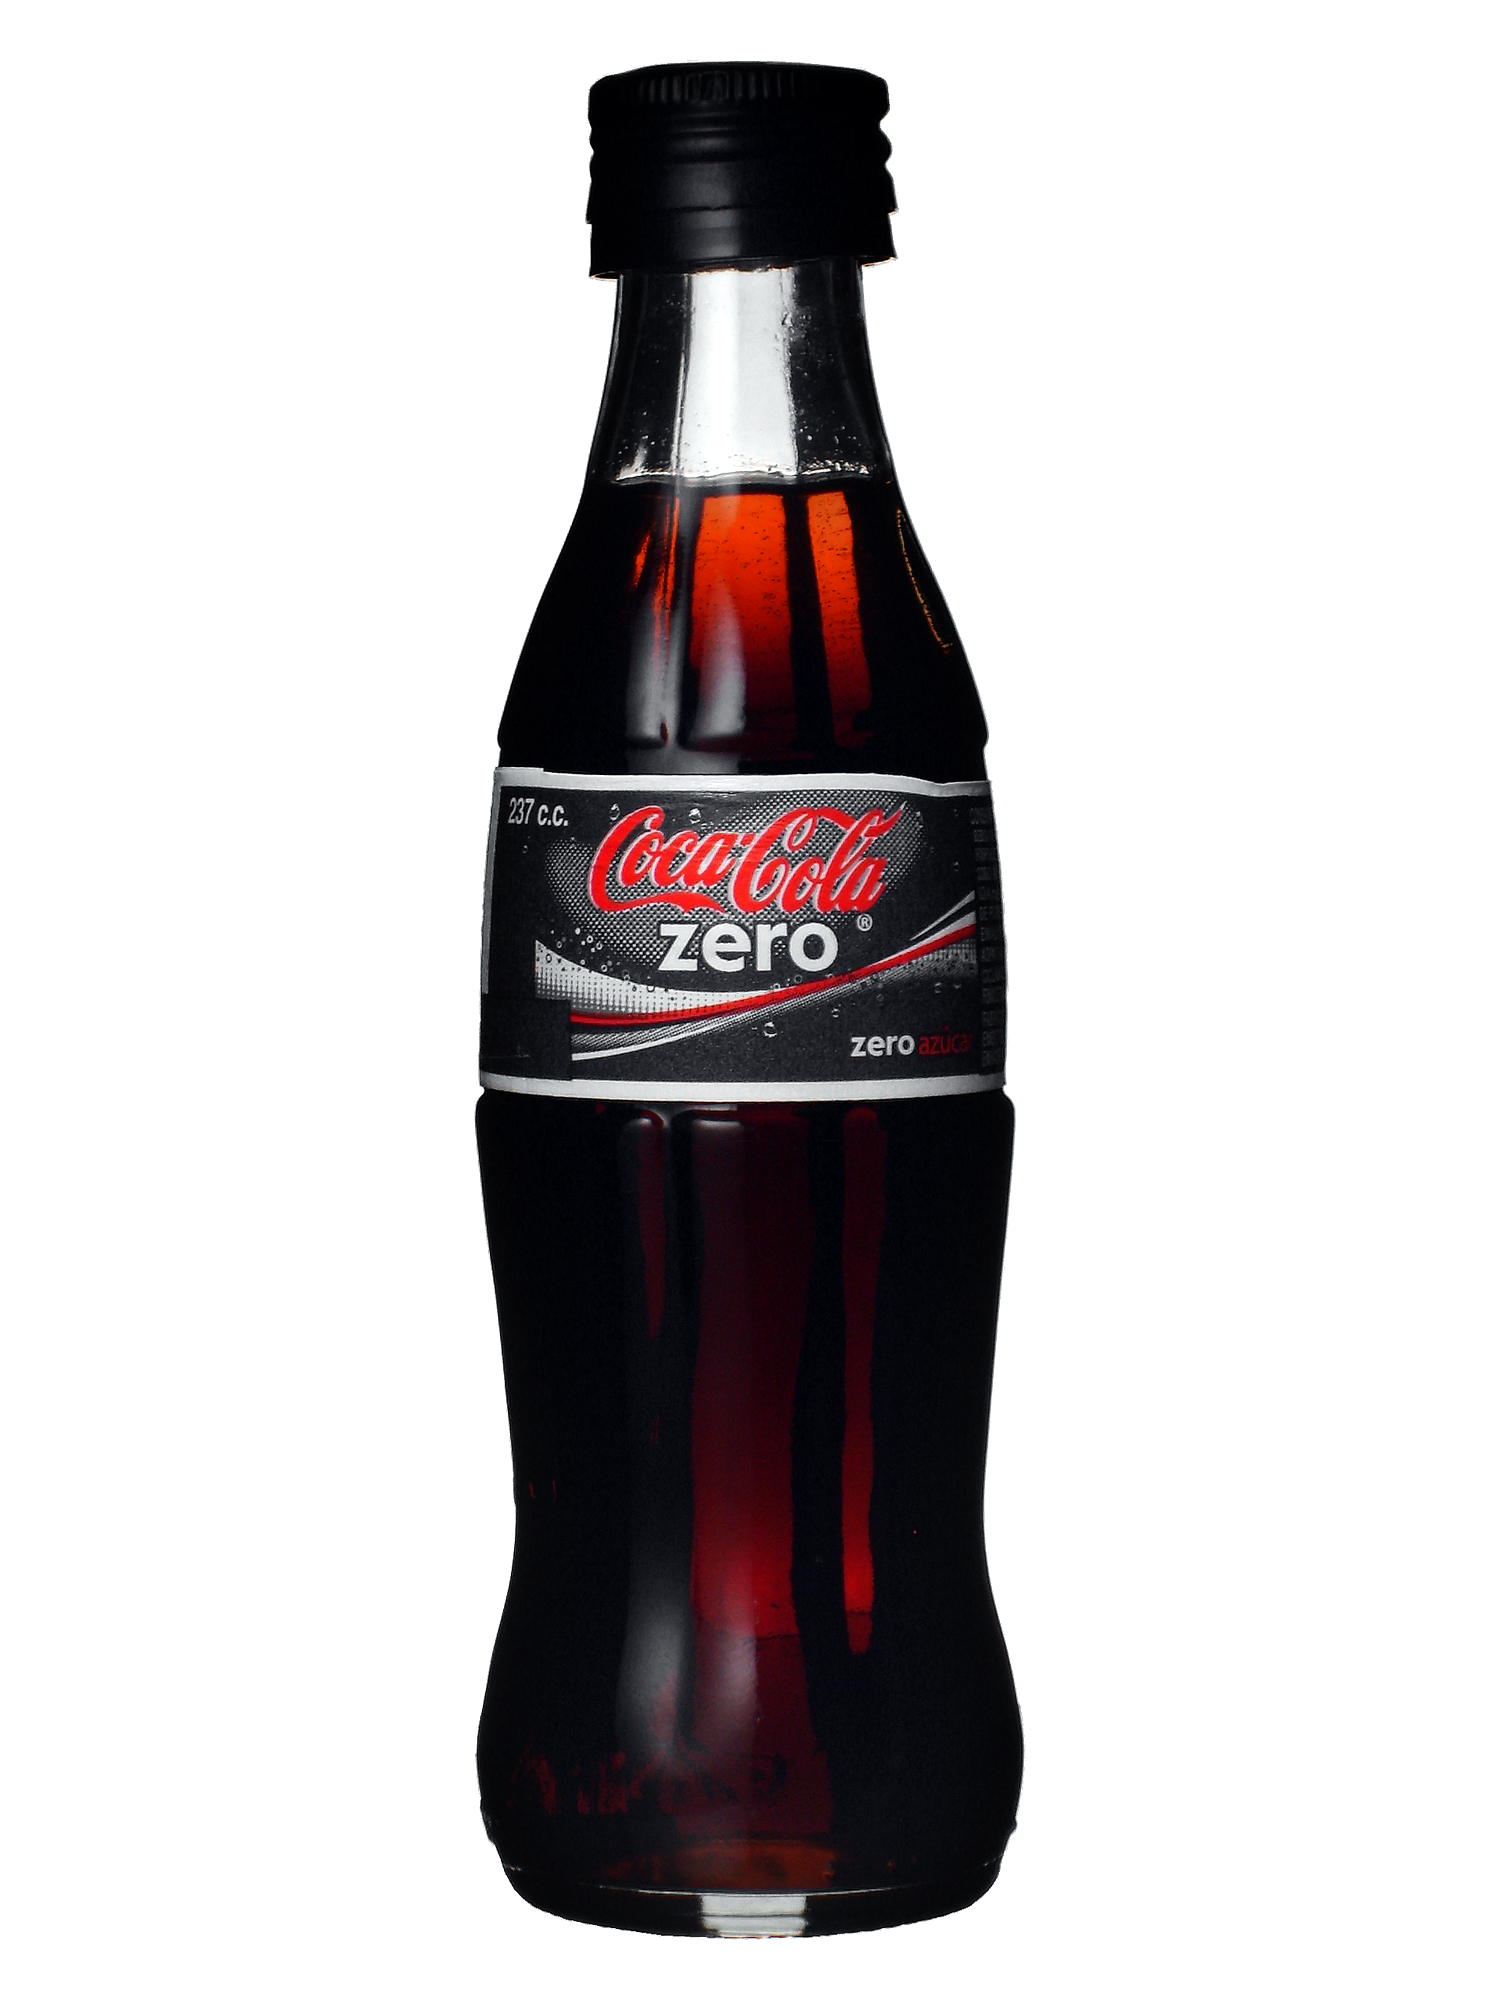 Coca Cola bottle PNG image